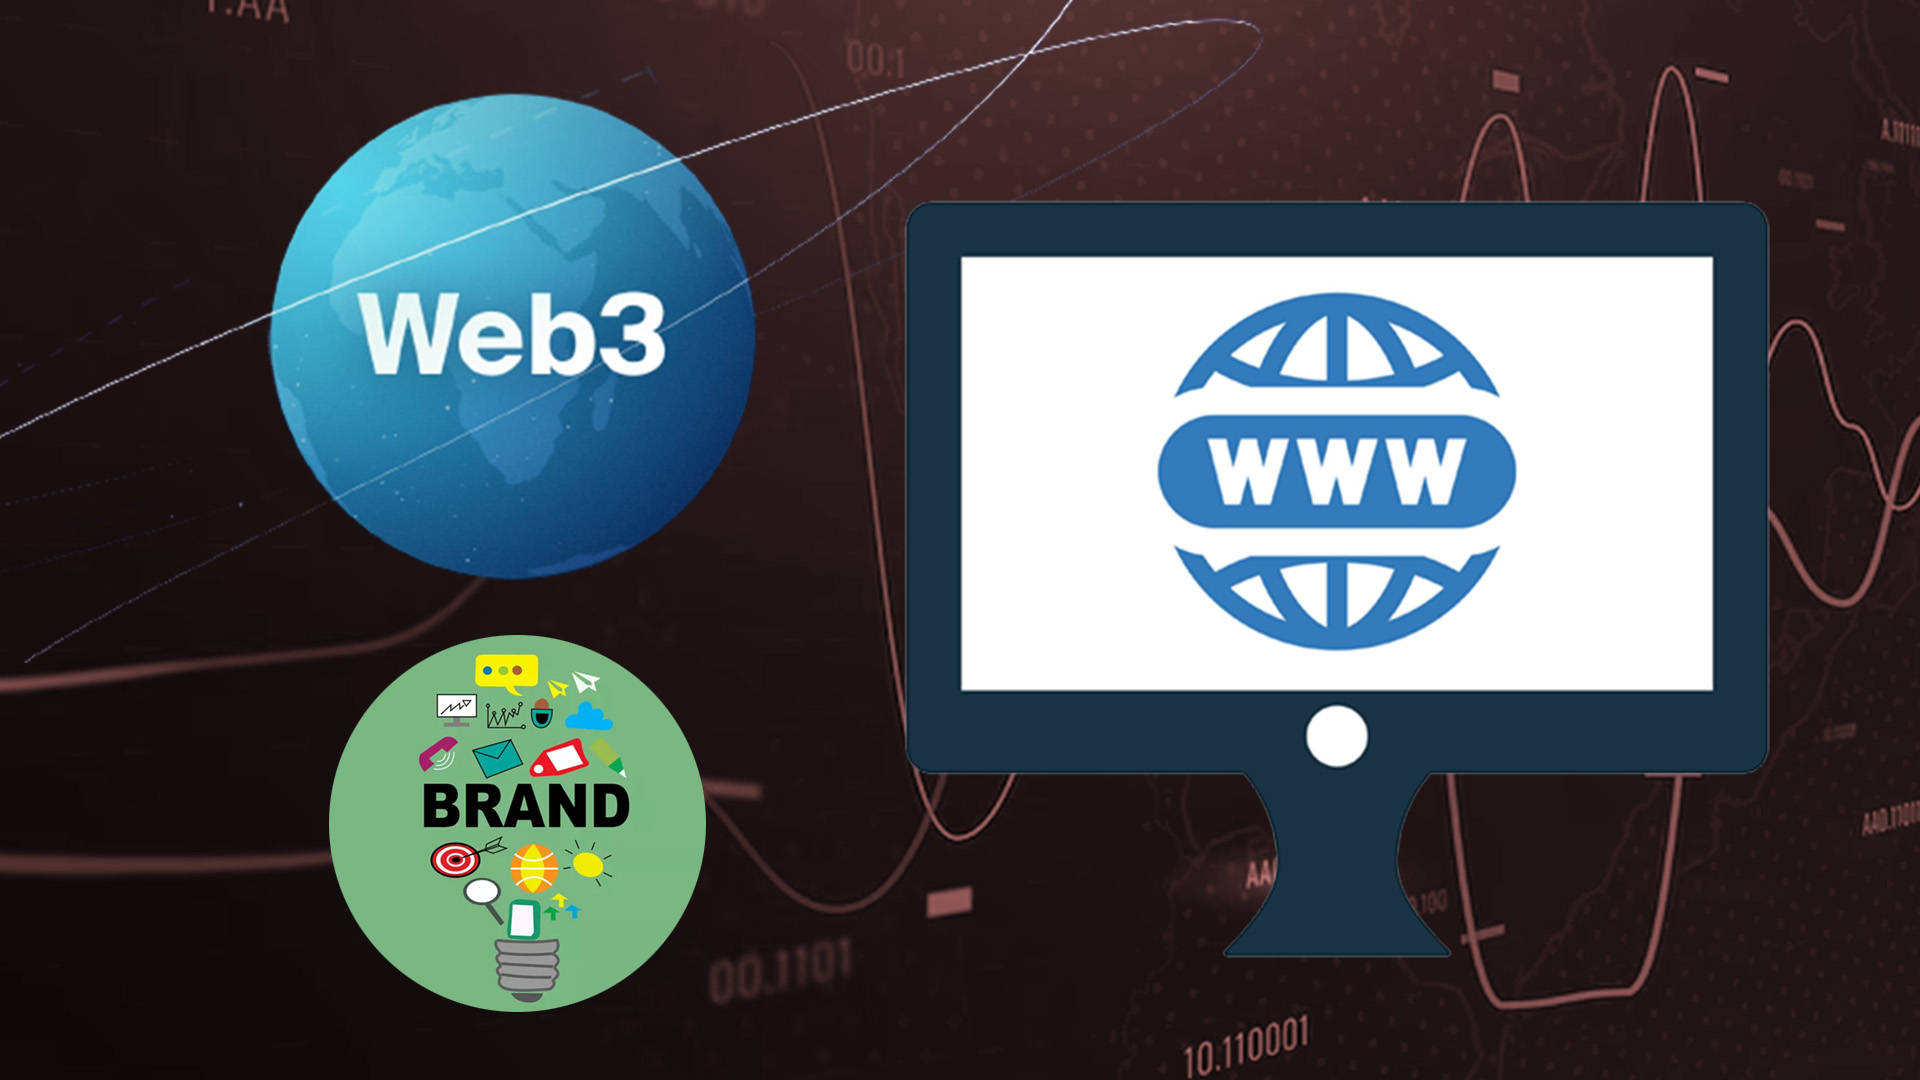 Global Web3 Branding With Their New Domain Name Establishments.